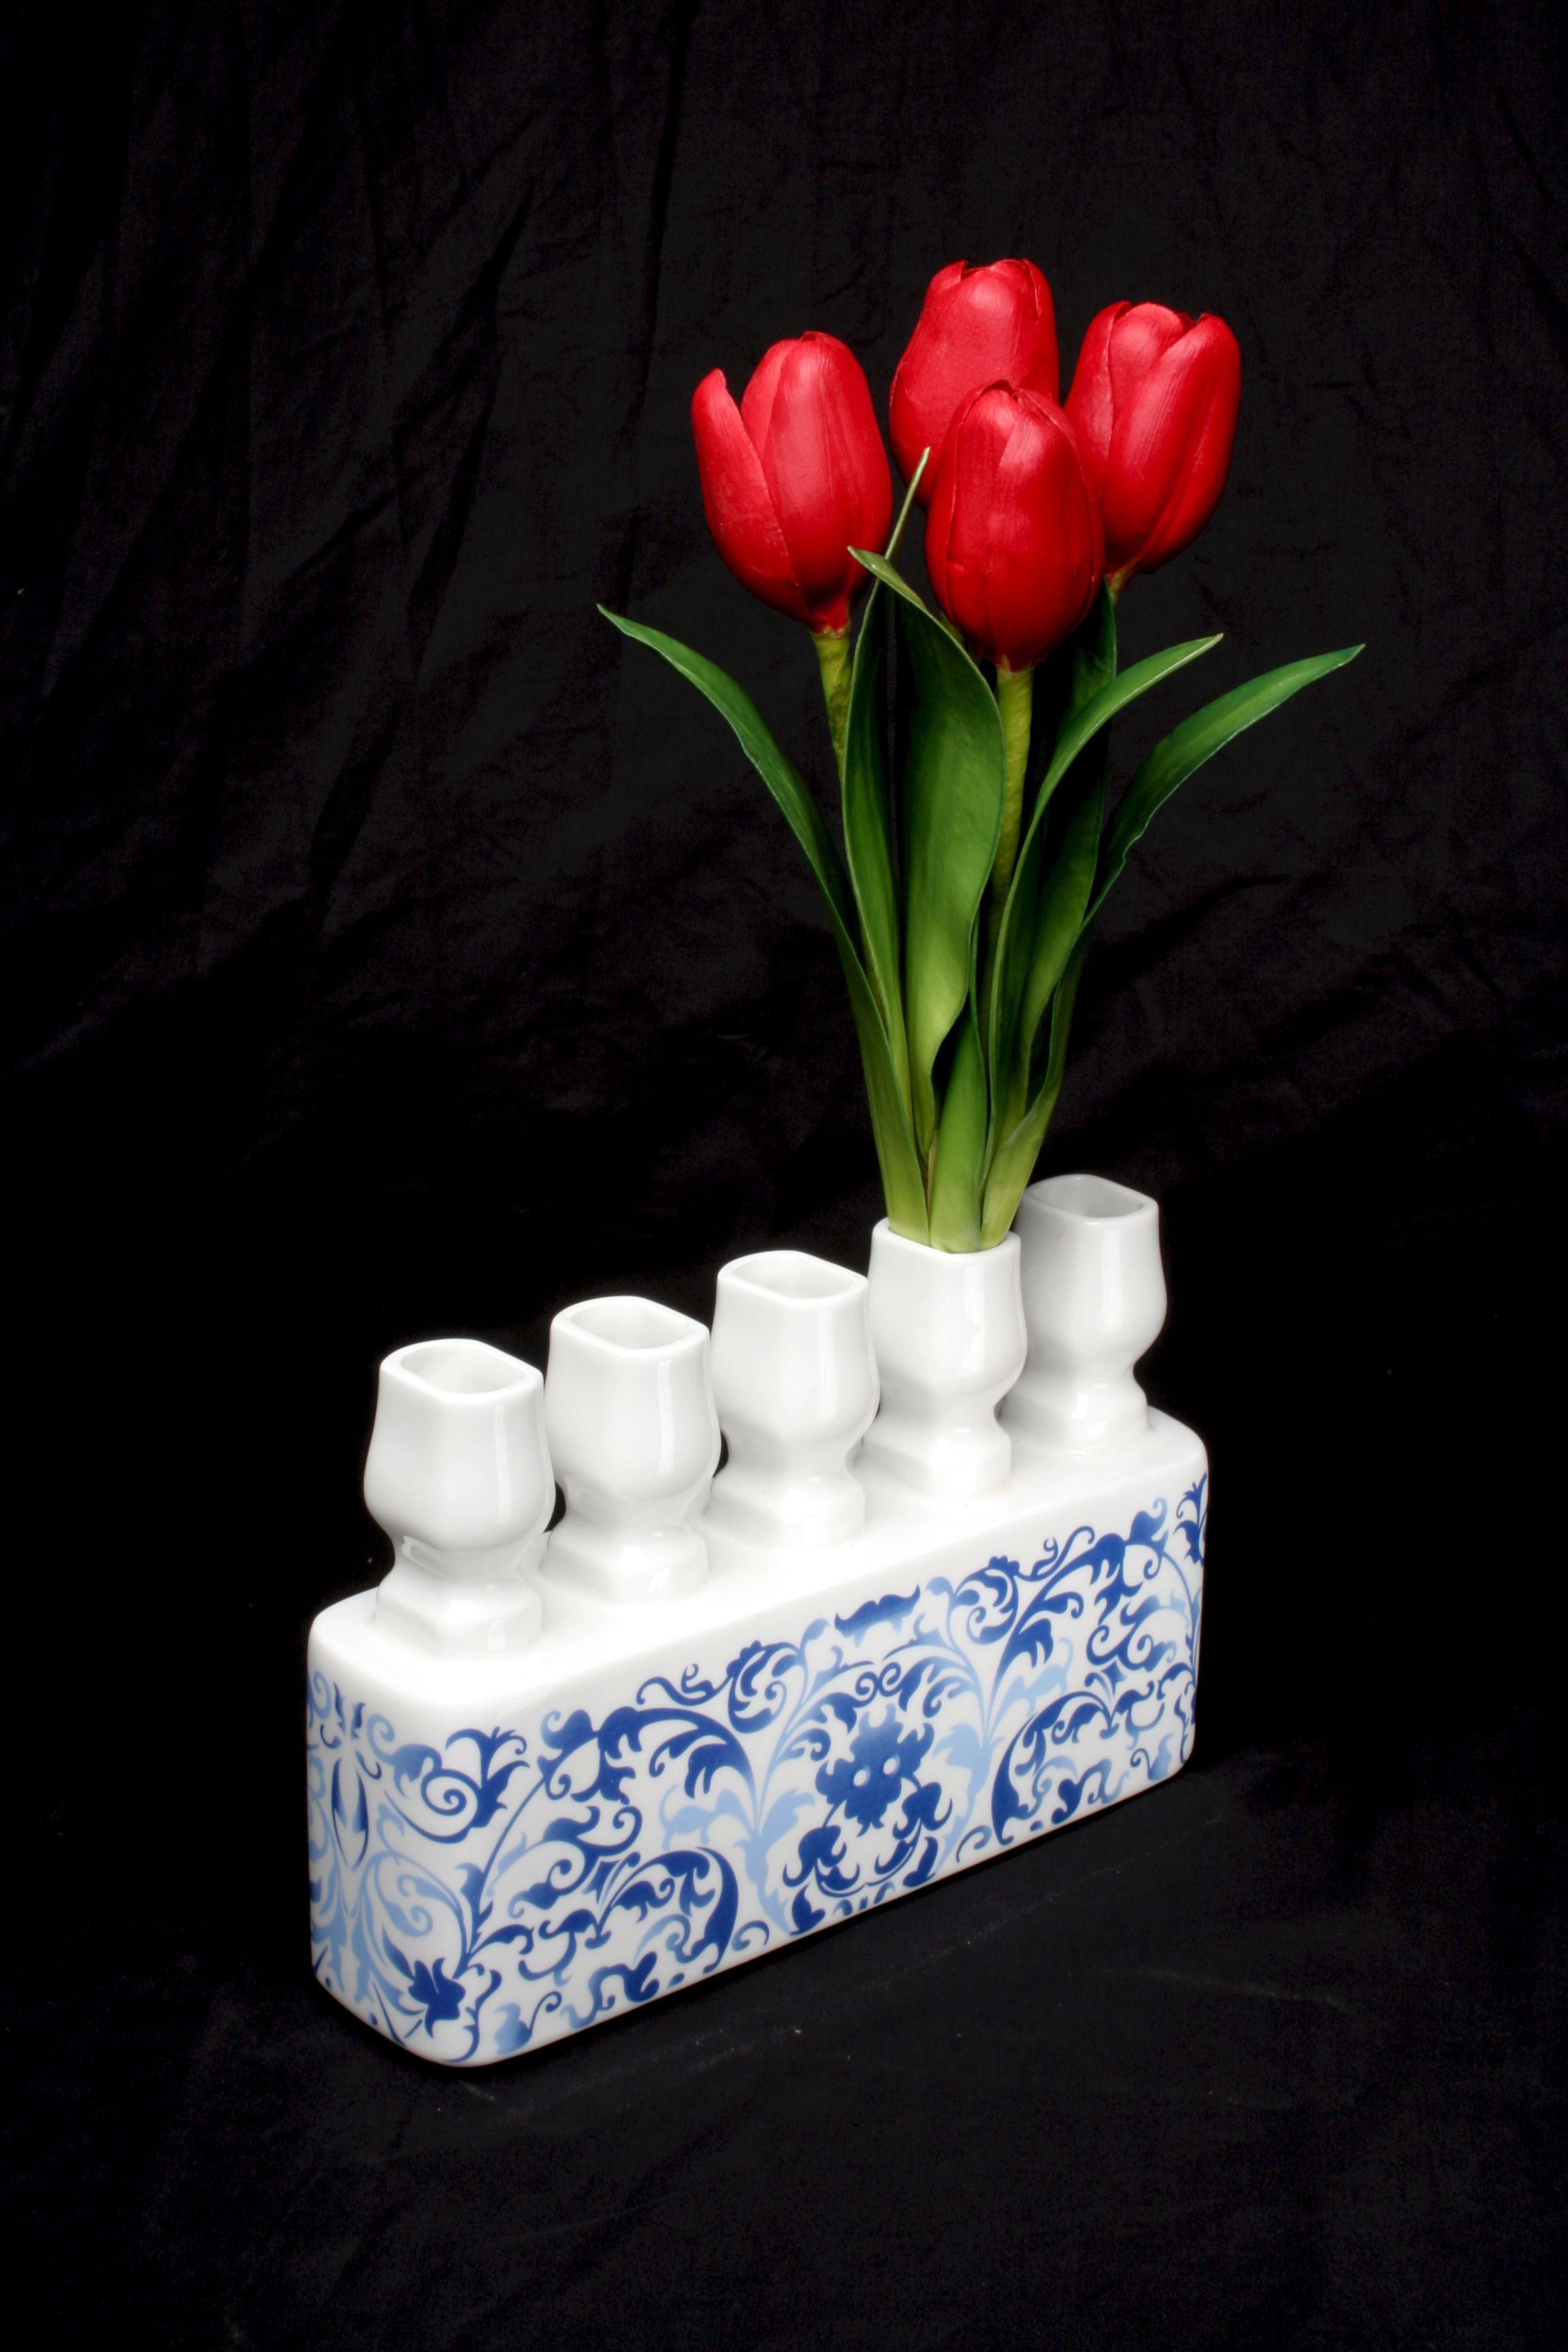 24 Lovable Royal Delft Tulip Vase 2024 free download royal delft tulip vase of tulip vase marcel wanders pottery pinterest tulips in vase regarding tulip vase marcel wanders tulips in vase white tulips white flowers ceramic